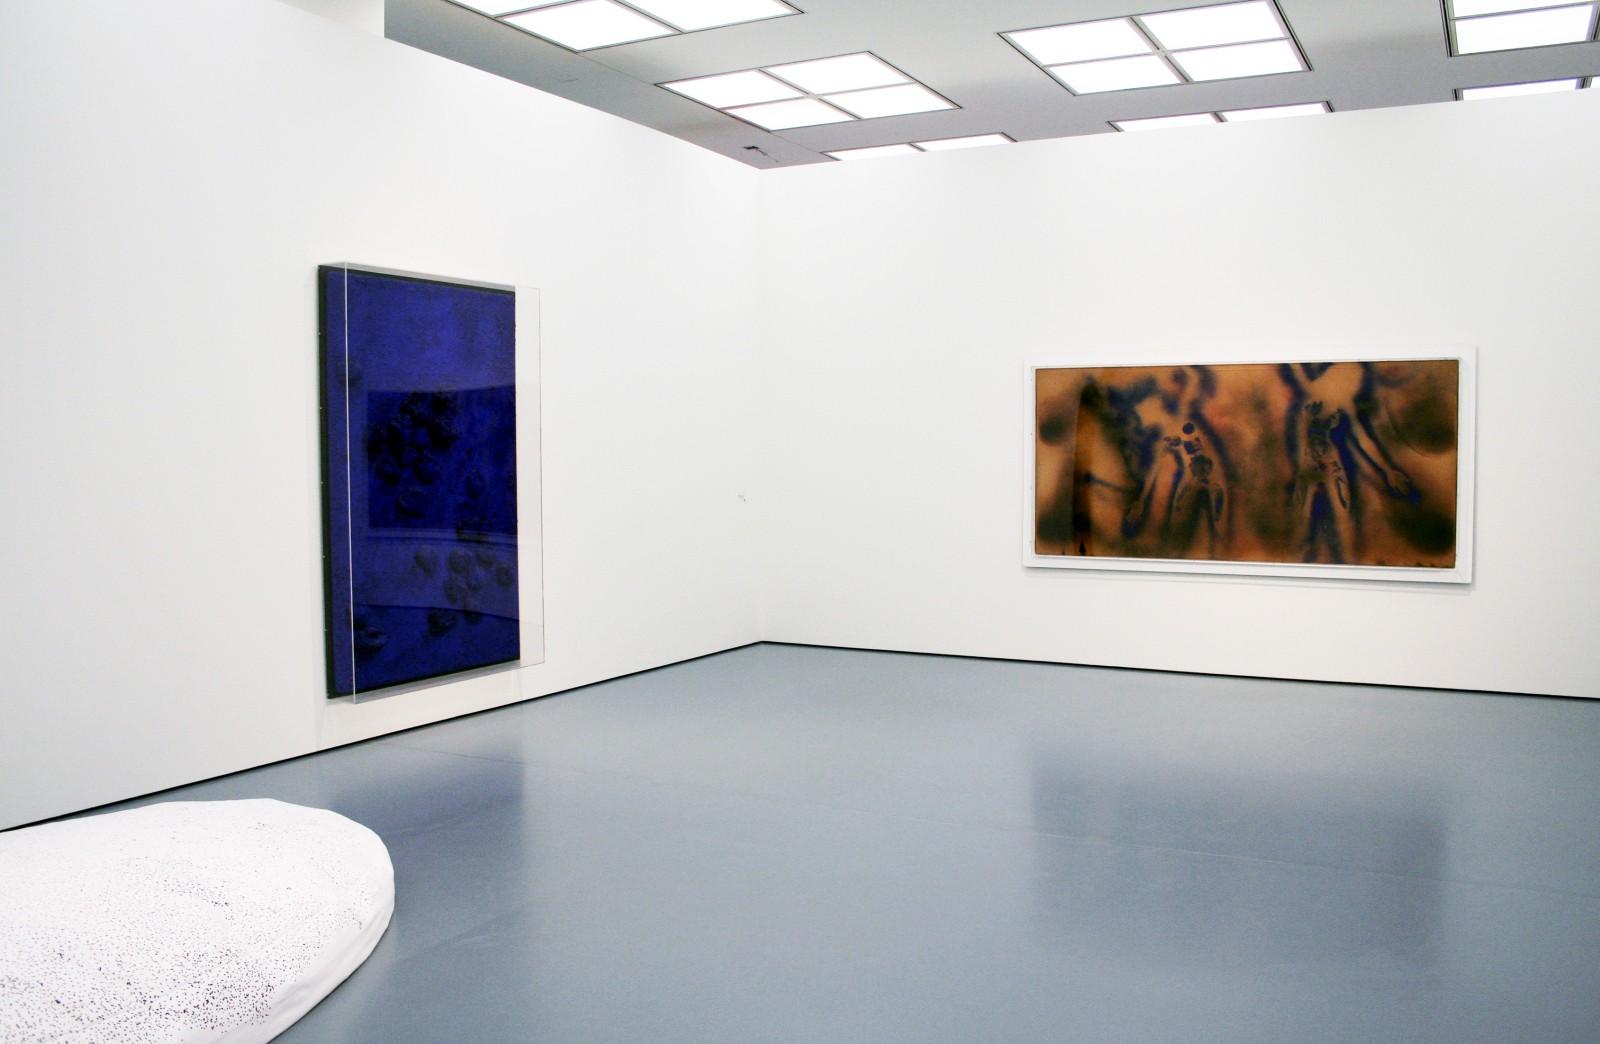 View of the exhibition, "Zero - Internationale Künstler-Avantgarde der 50er/60er Jahre", Museum Kunstpalast, 2006 (RE 18, FC 1)